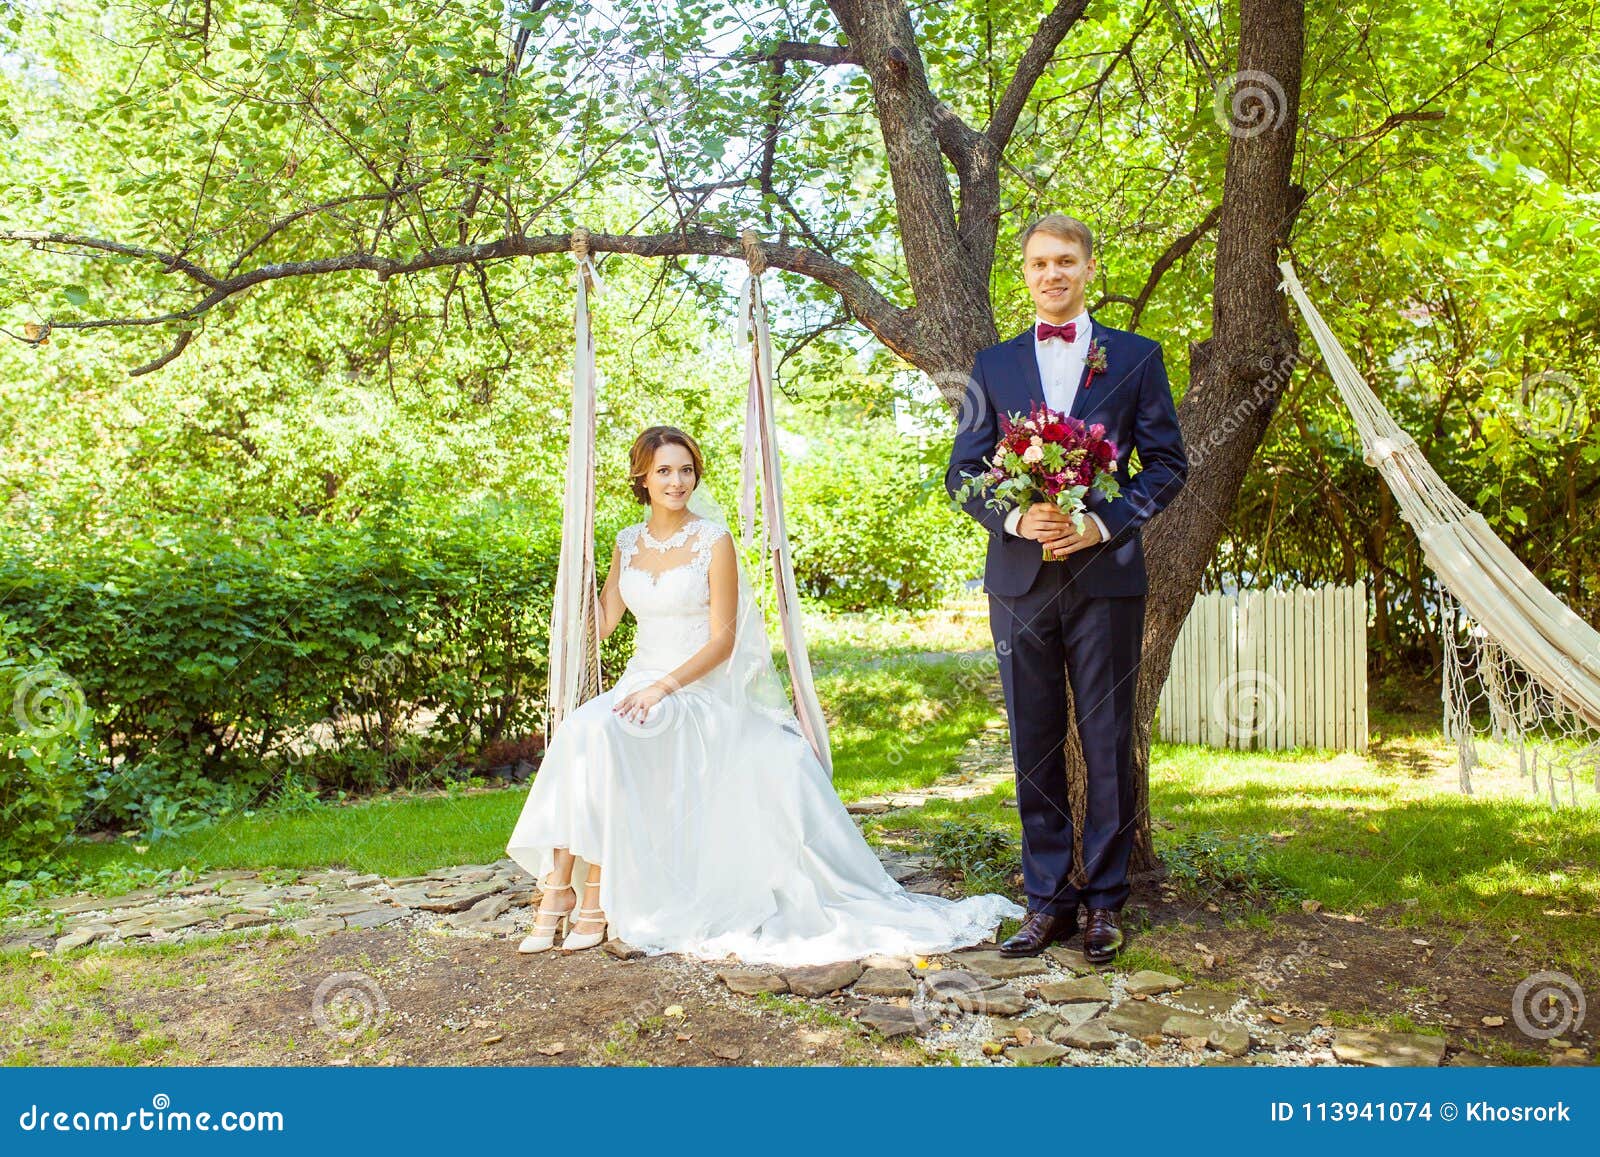 wife and husband swing